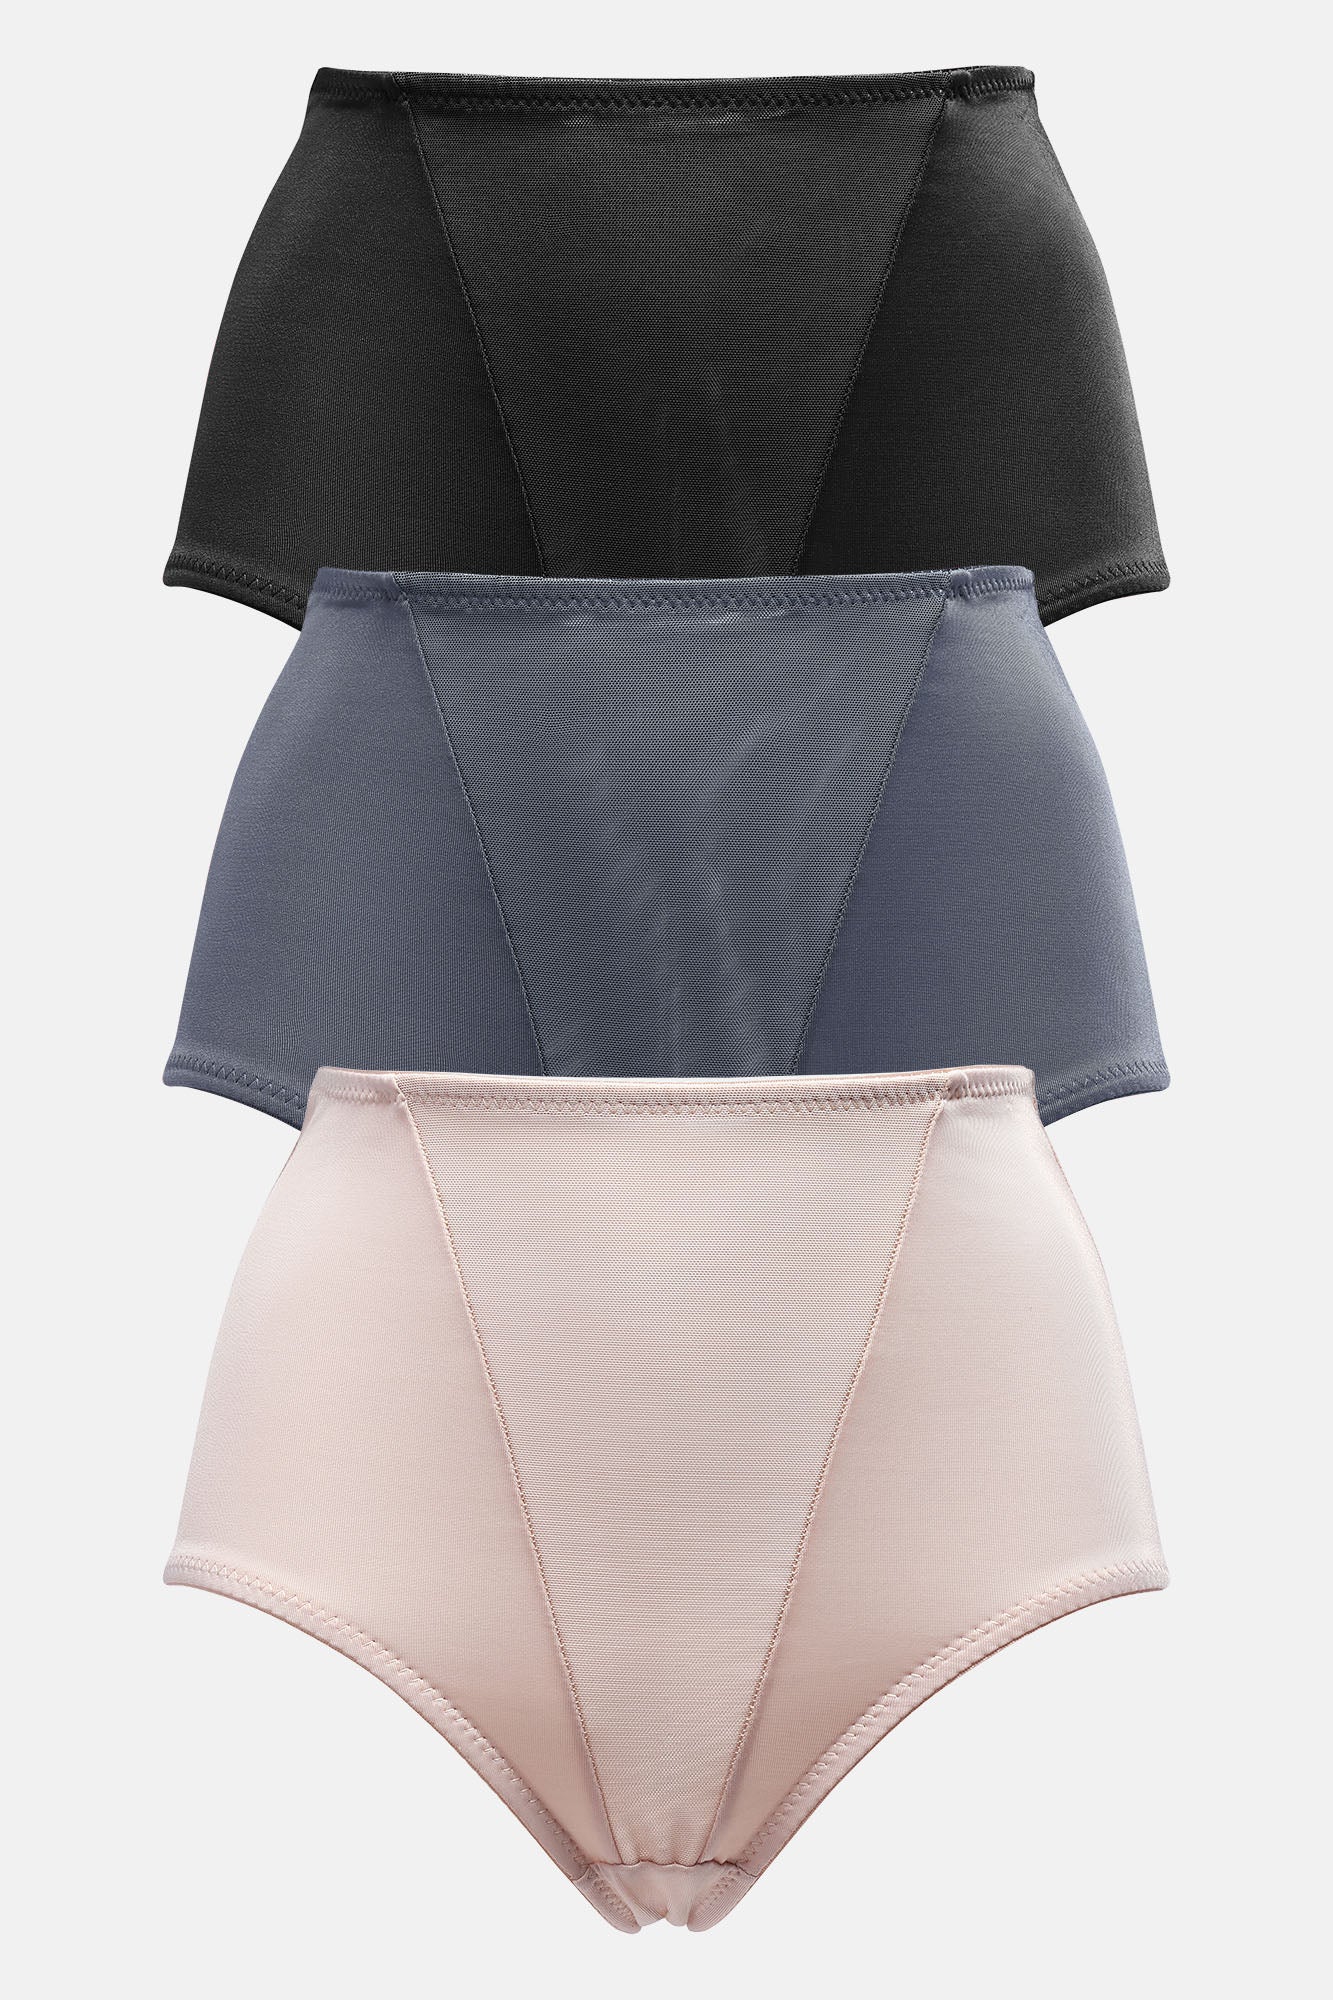 Visible Shape Brief Shapewear 3 Pack Panties - Black/combo, Fashion Nova,  Lingerie & Sleepwear